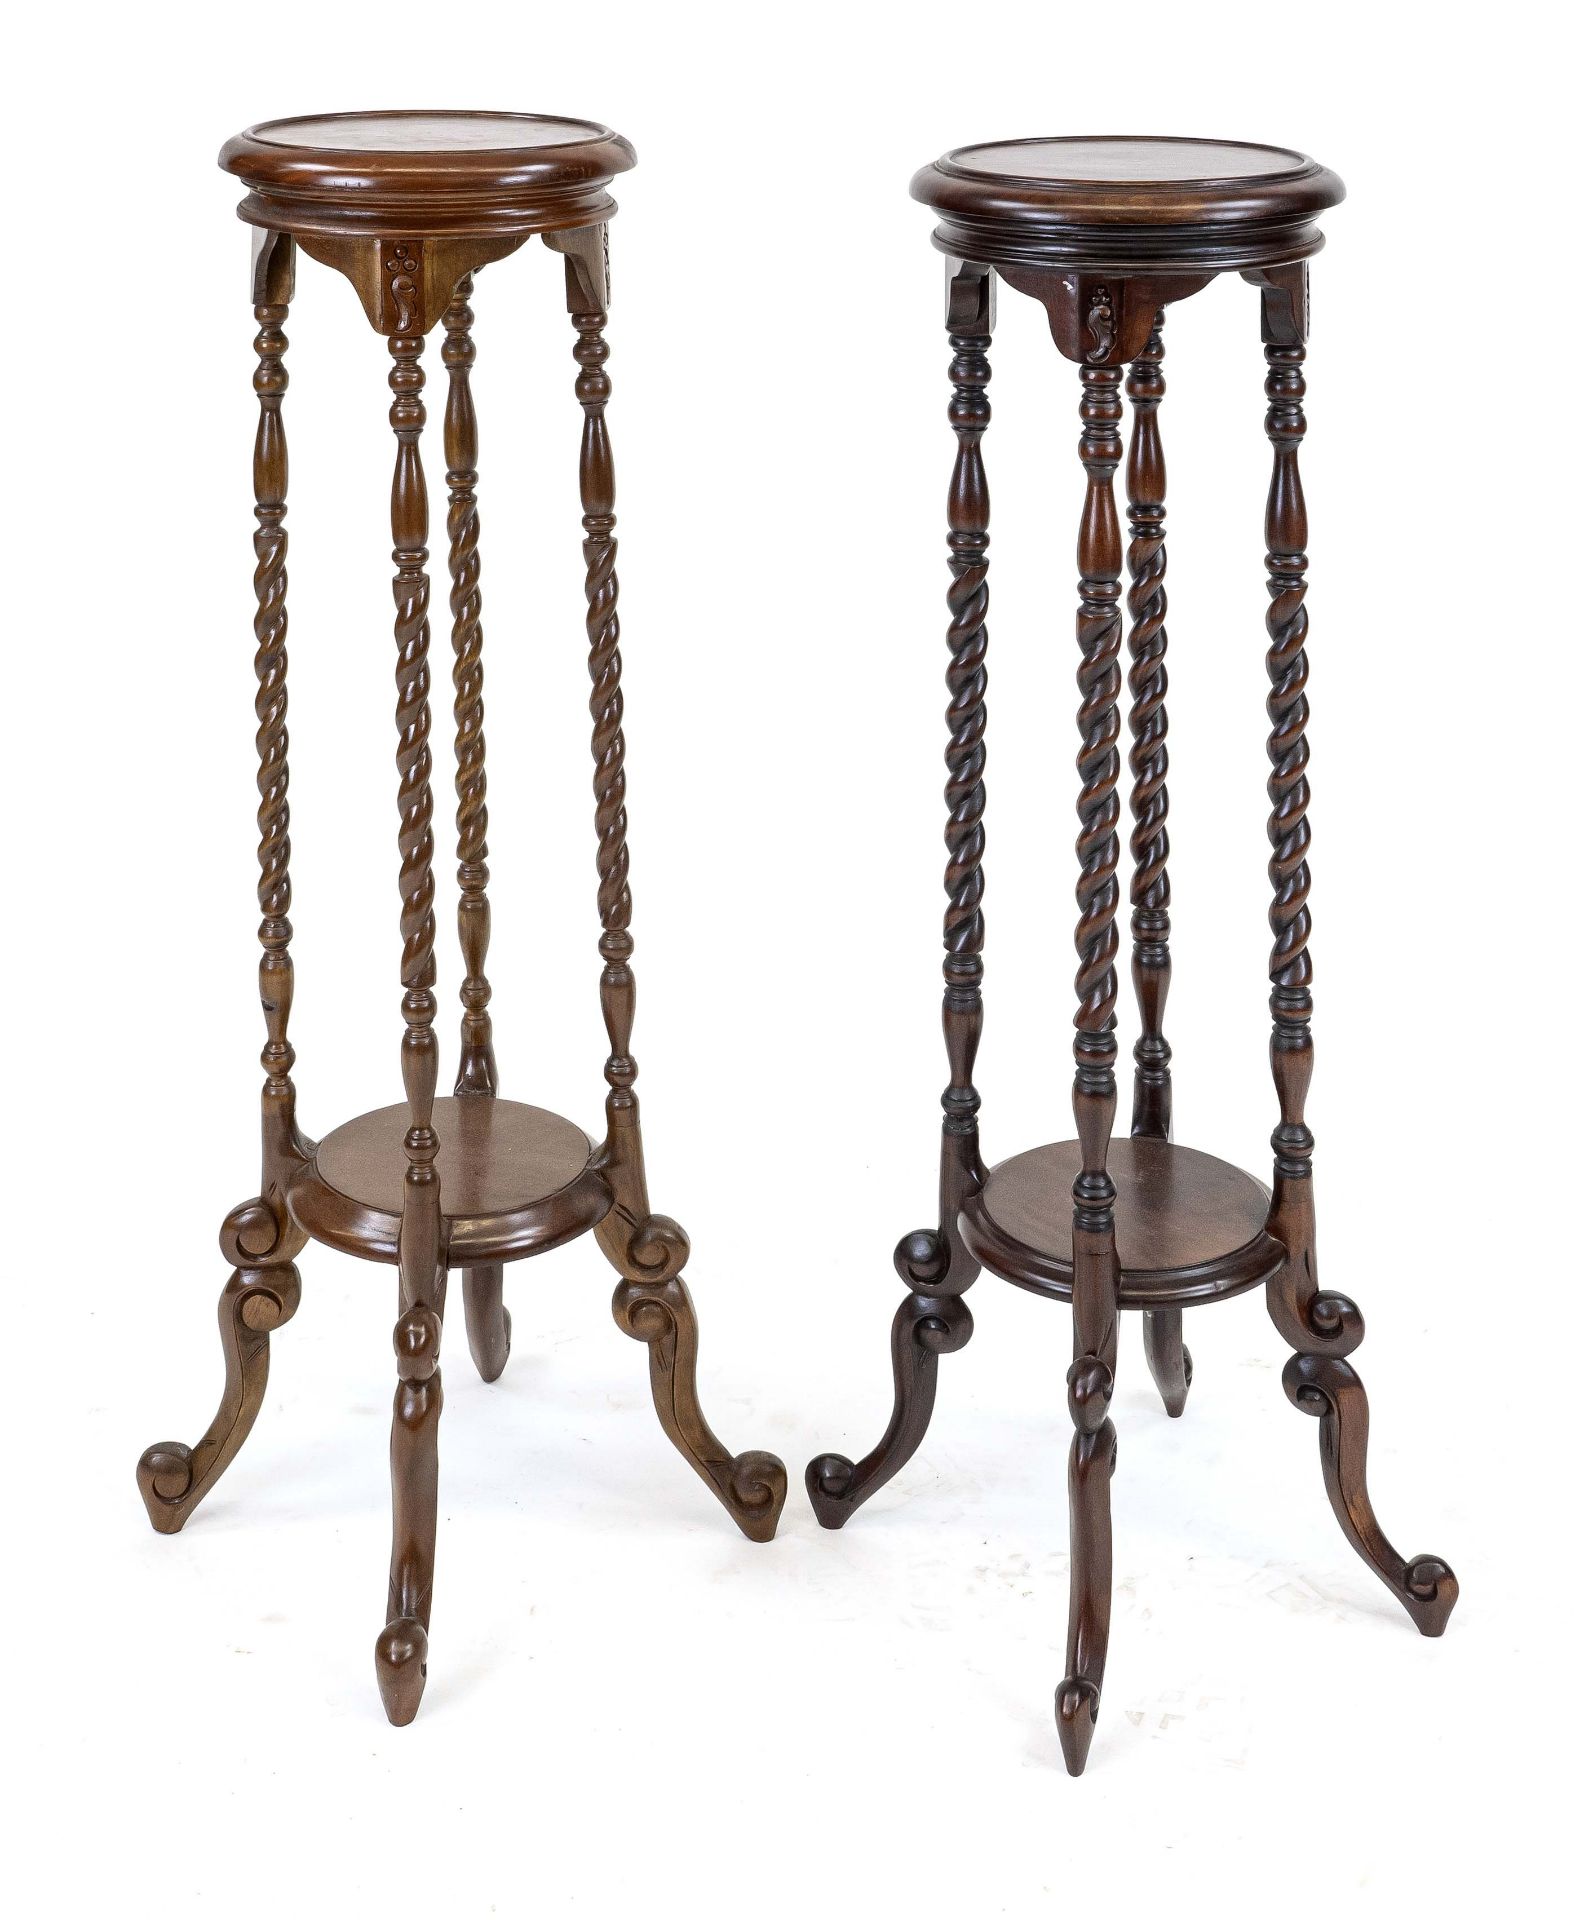 Pair of English-style palm tree pedestals, 20th century, mahogany, h. 100 cm, d. 28 cm